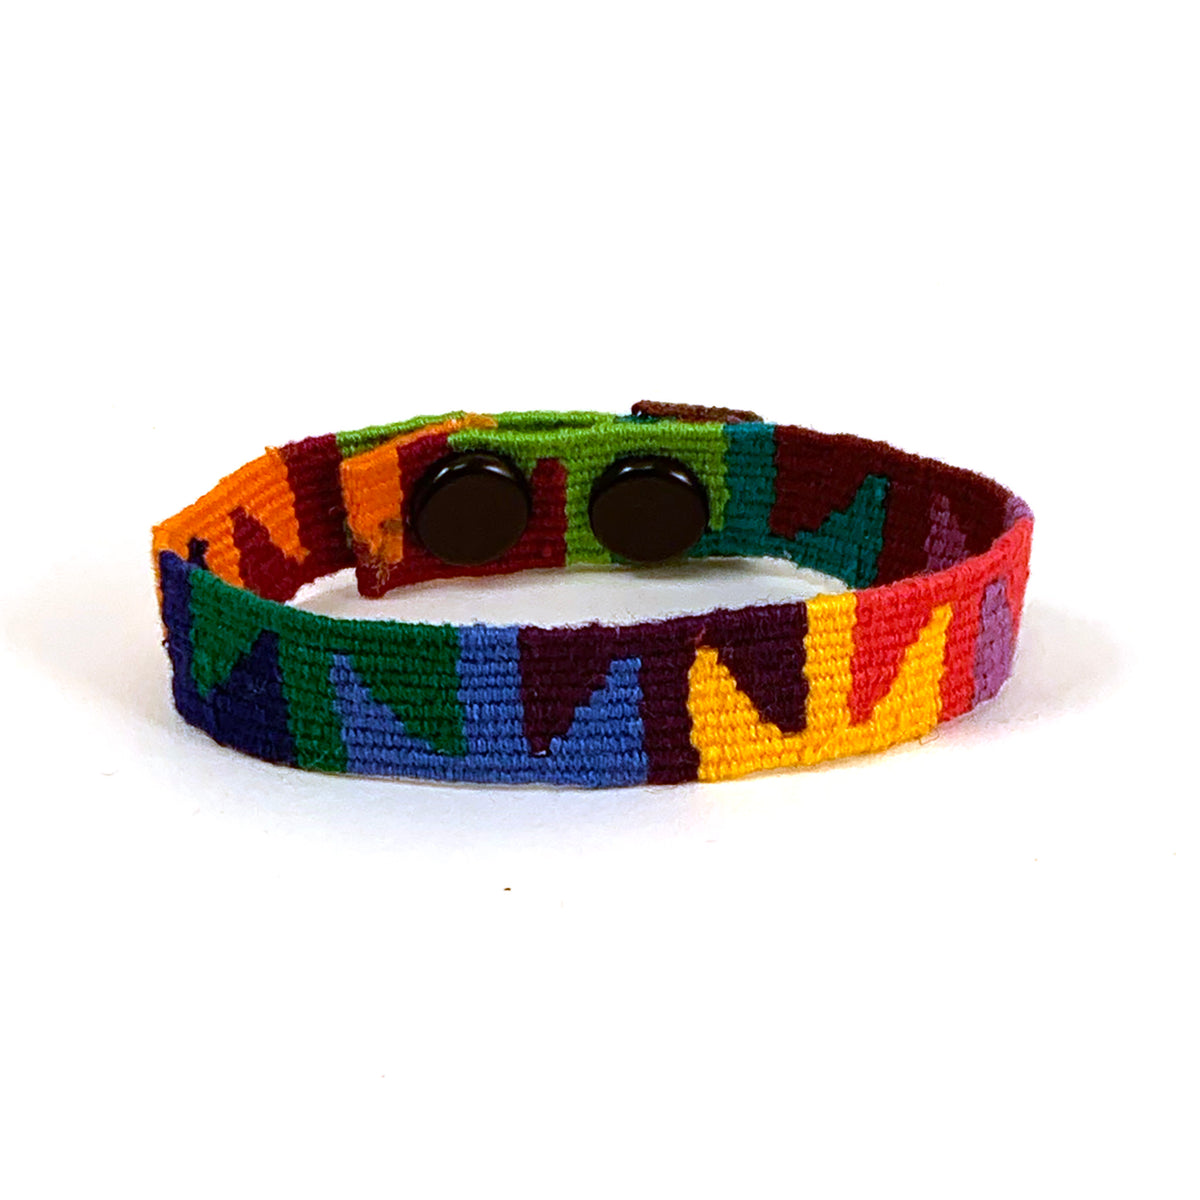 handwoven friendship bracelet with snaps - rainbow multi-color